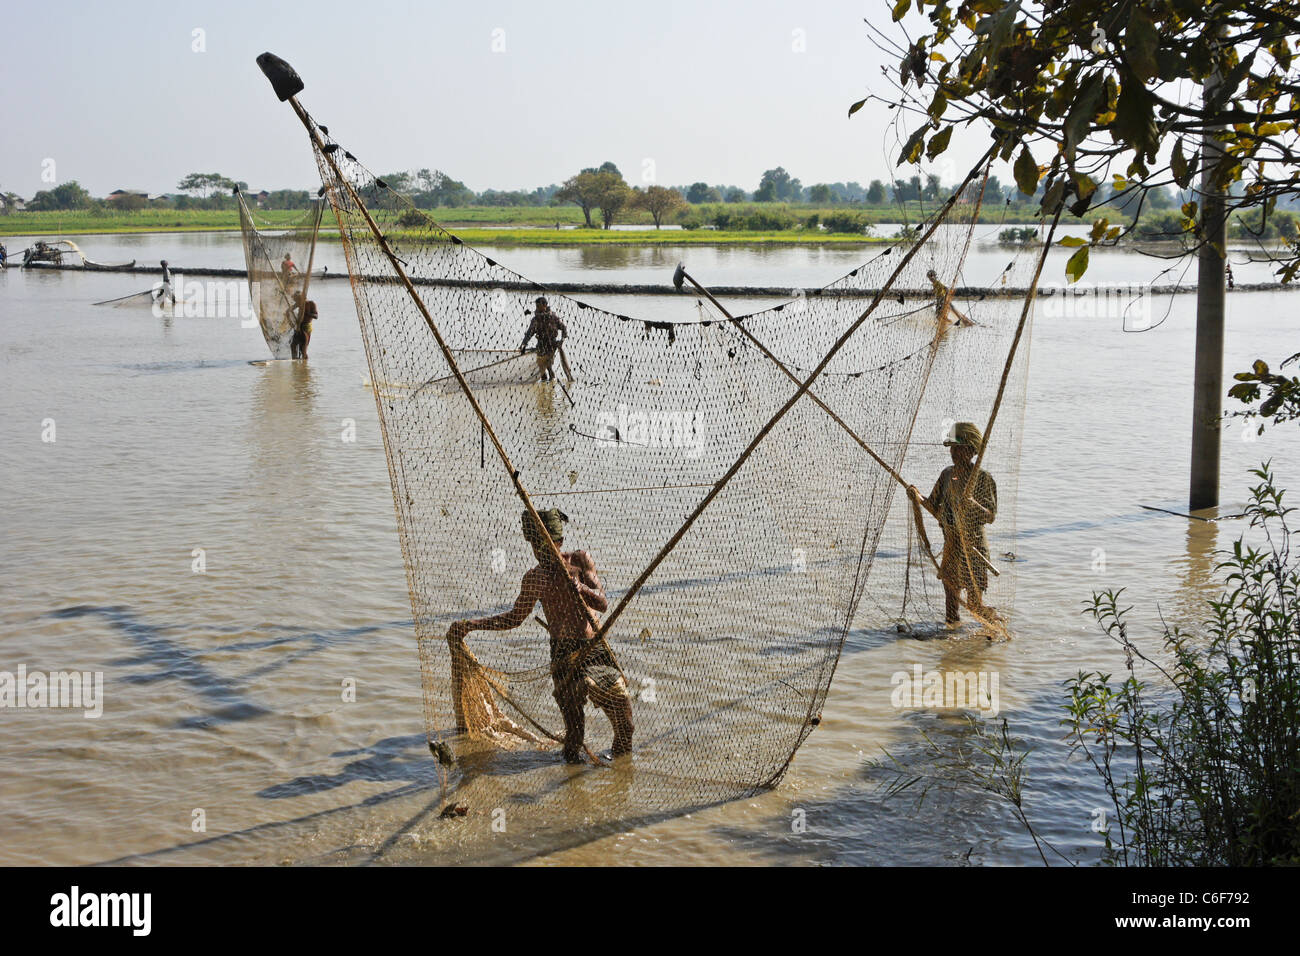 Men fishing with large nets and poles, Mandalay, Myanmar (Burma